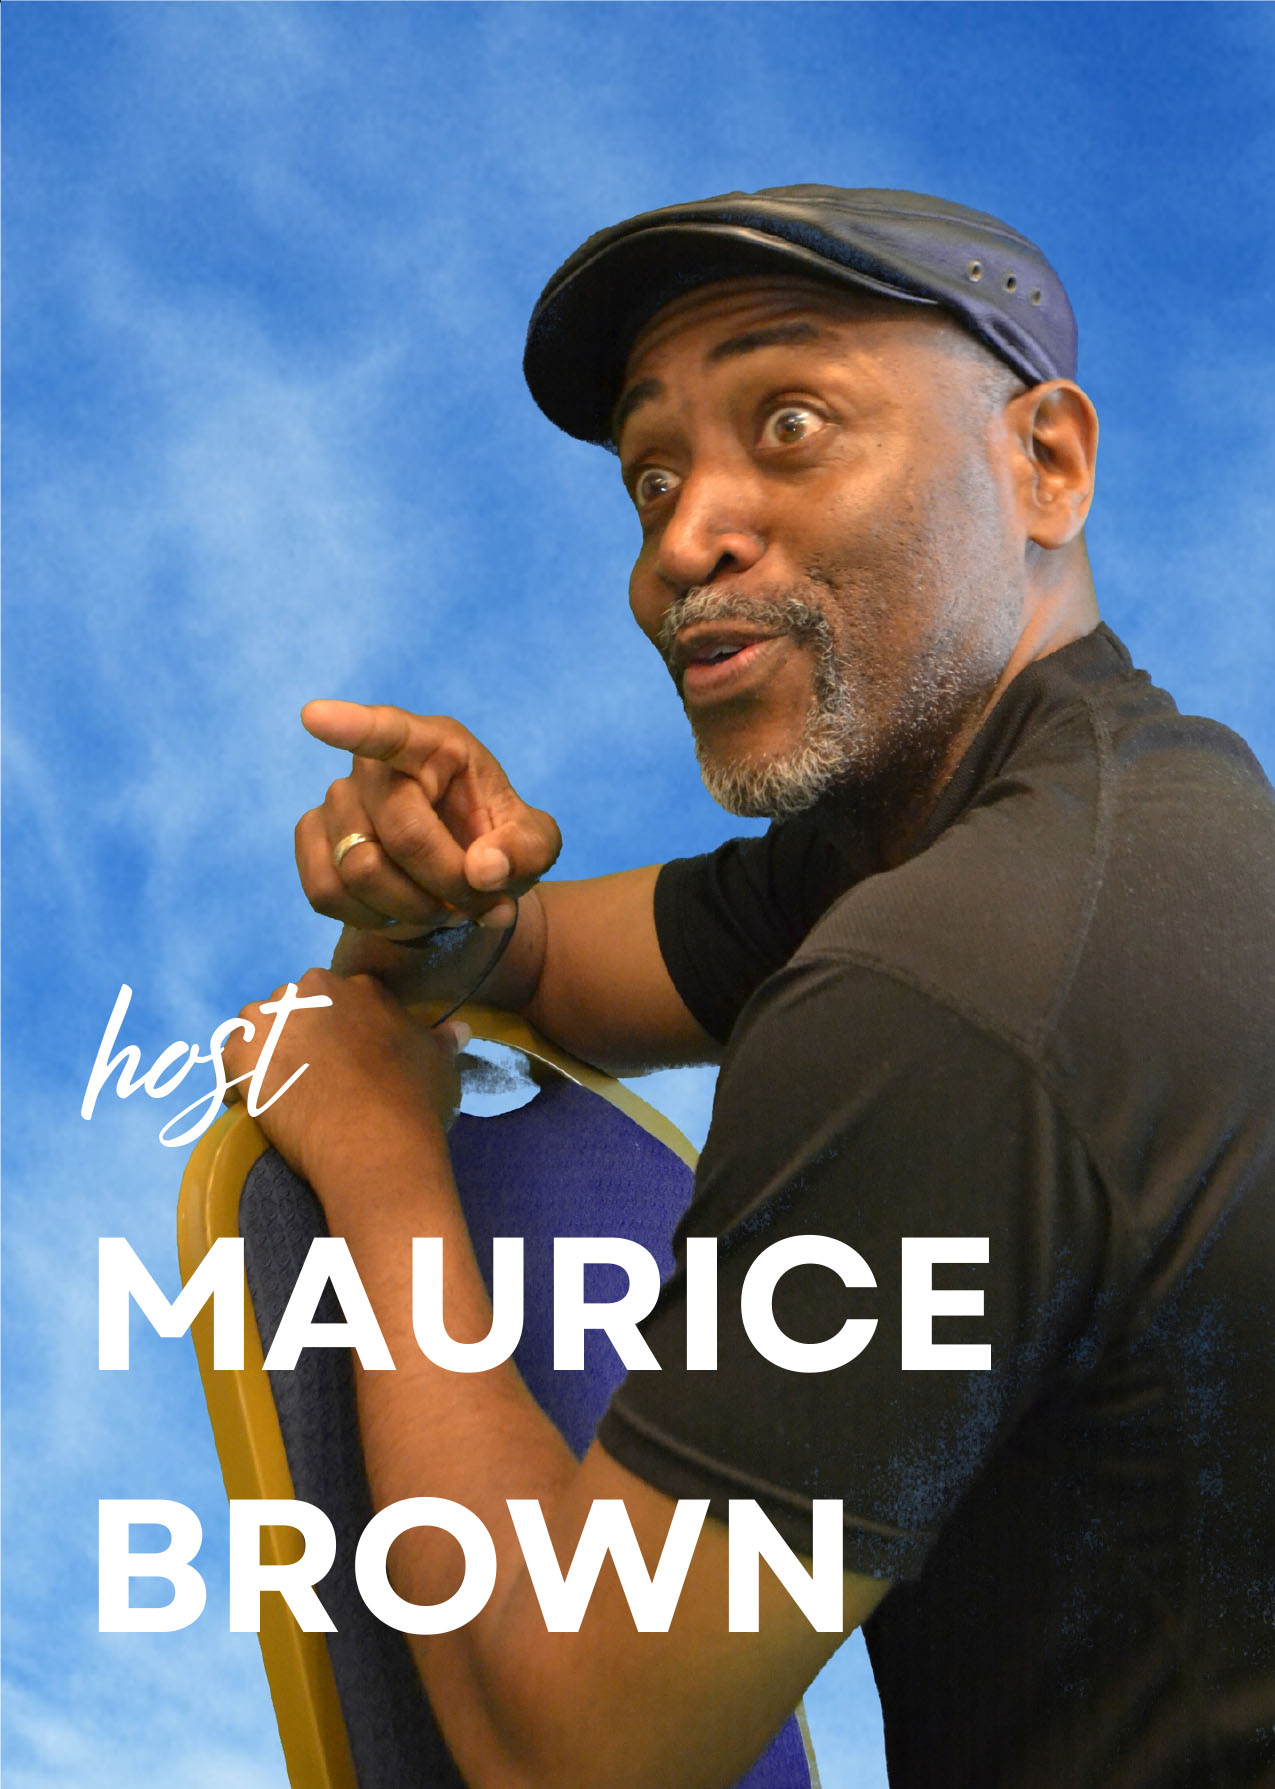 Host Maurice Brown